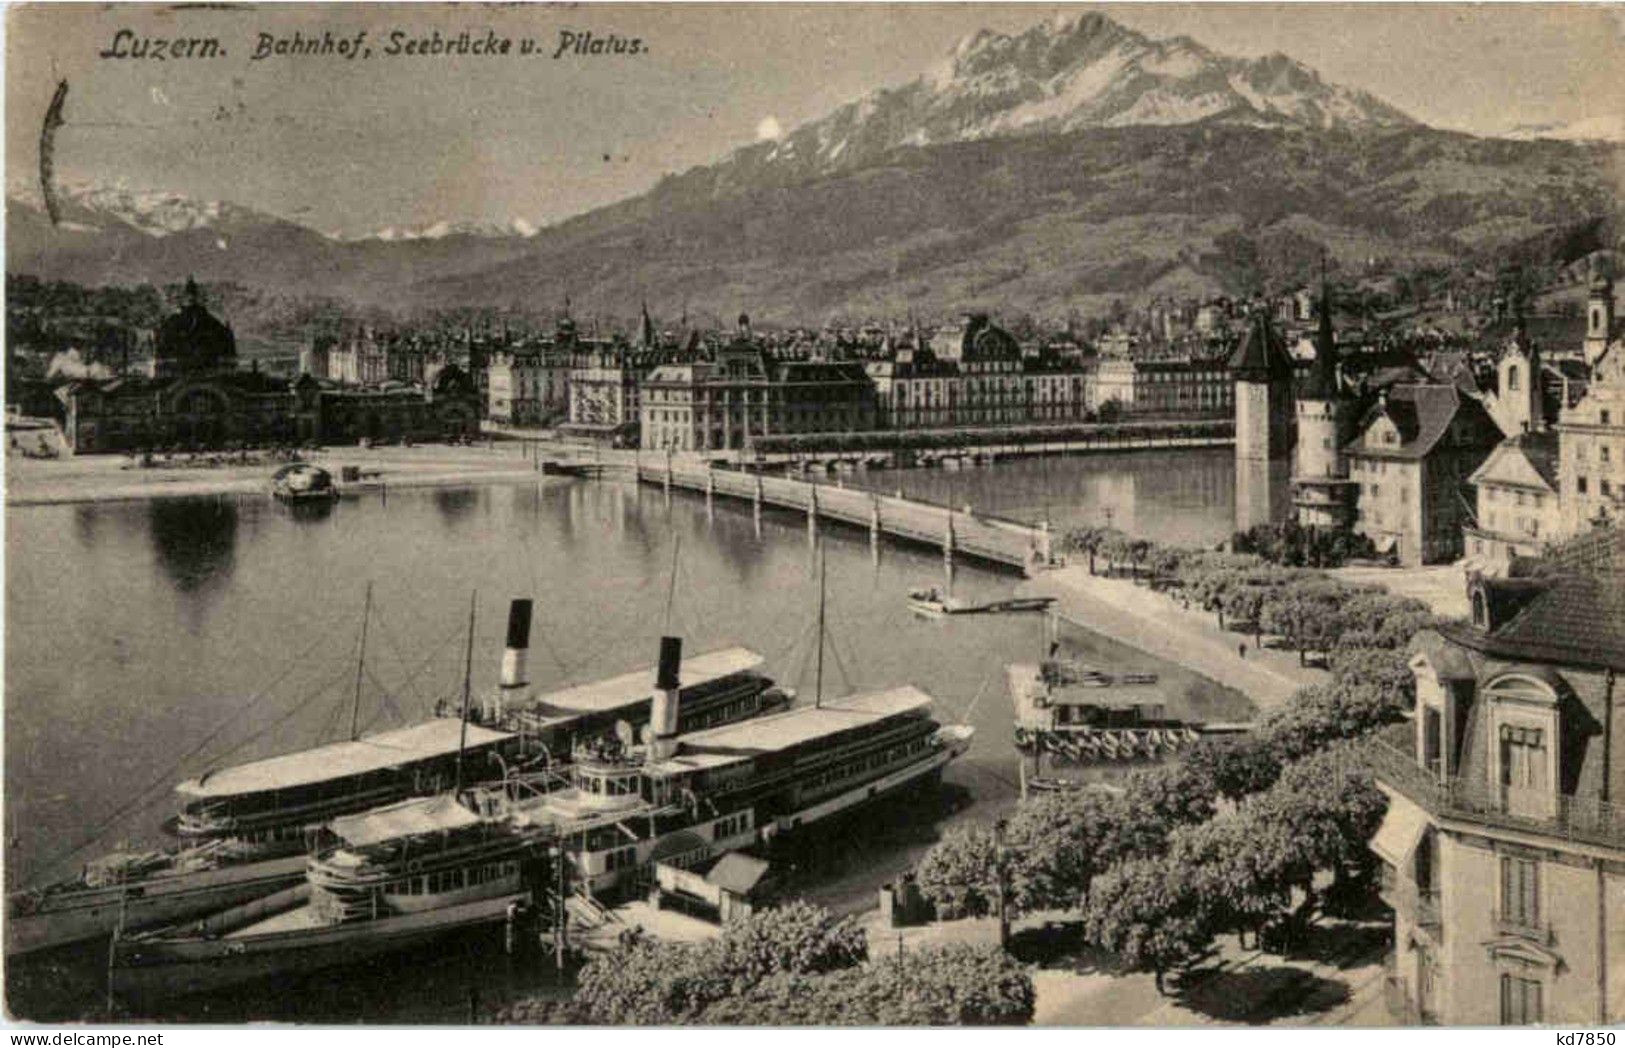 Luzern - Lucerna